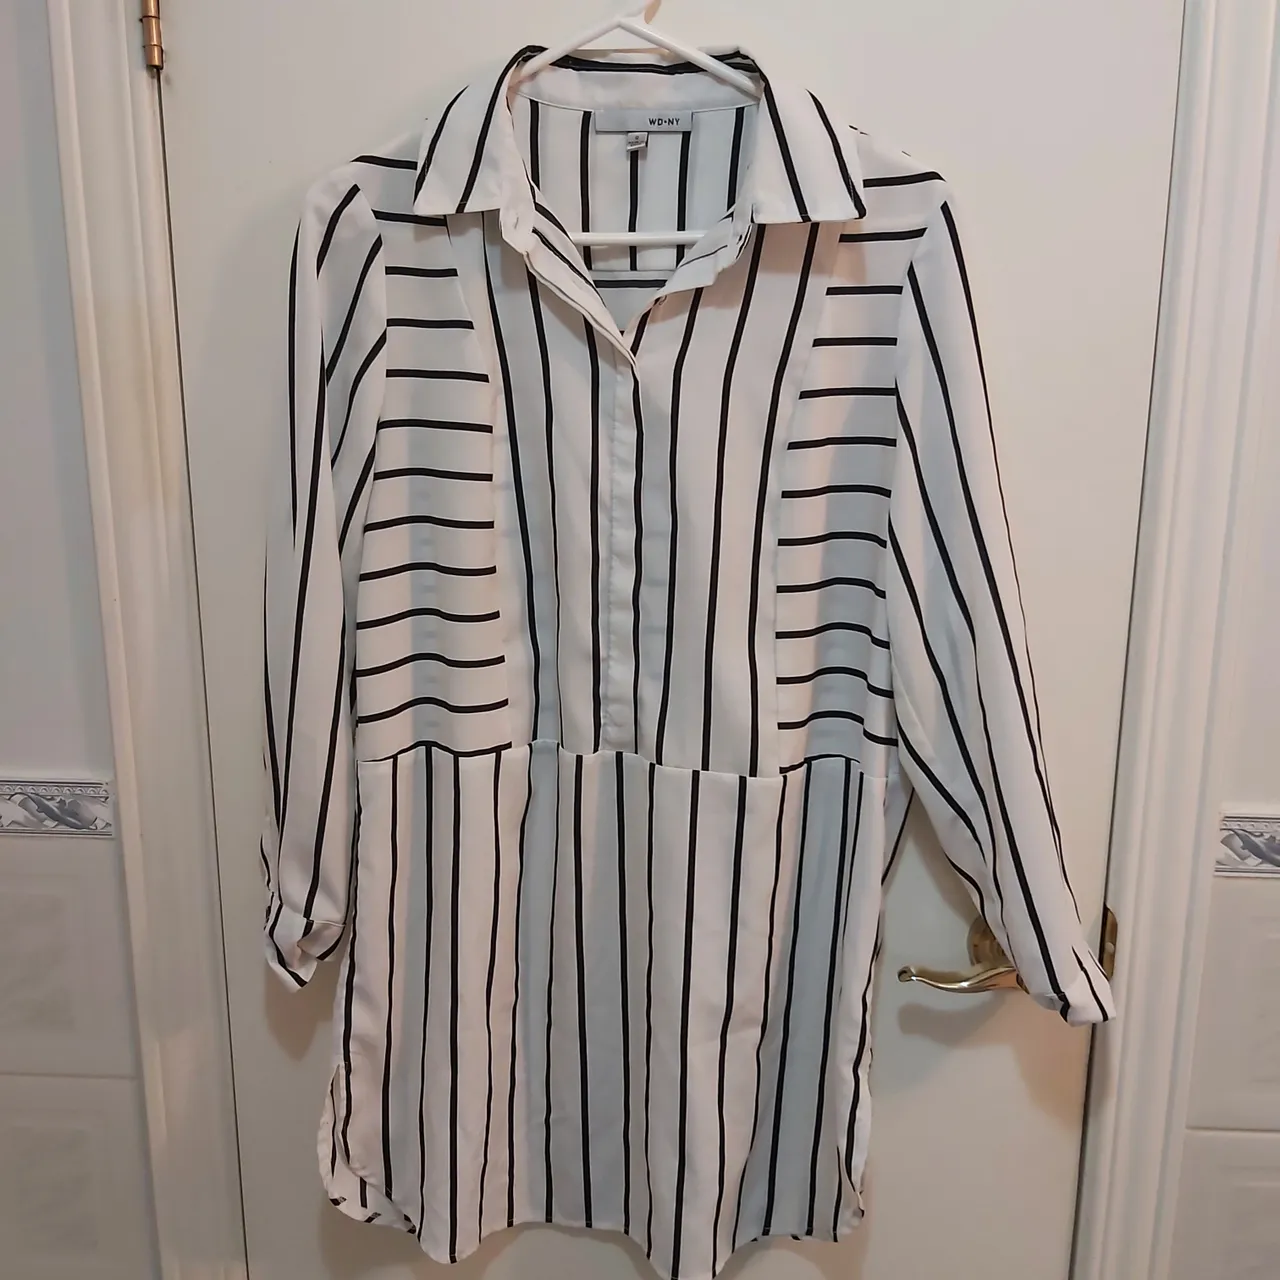 WD NY white tunic with black stripes photo 1